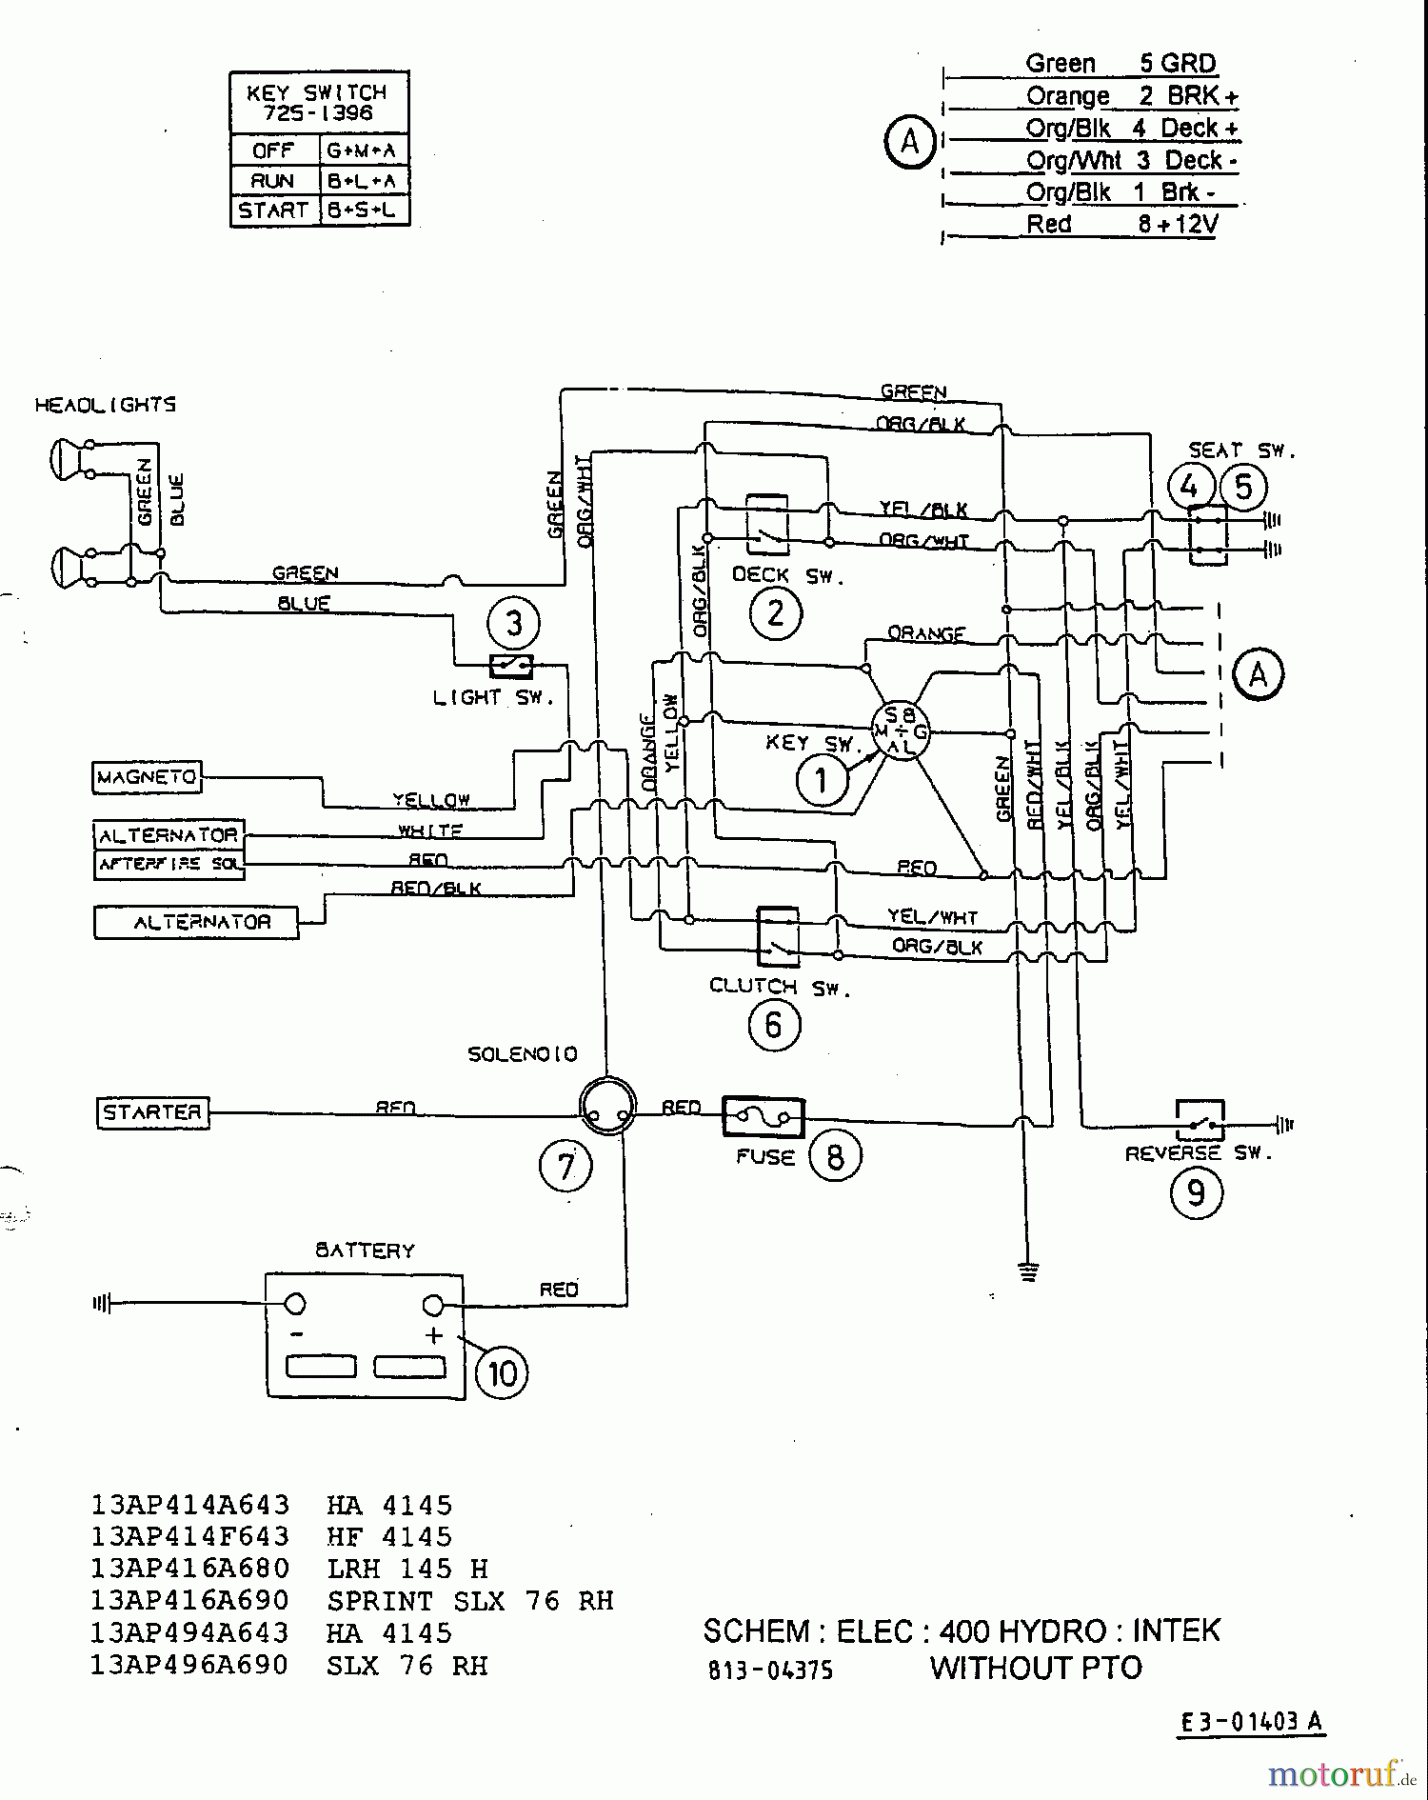  White Rasentraktoren LRH 160 E 13AD493E679  (1999) Schaltplan Intek ohne Elektromagnetkupplung